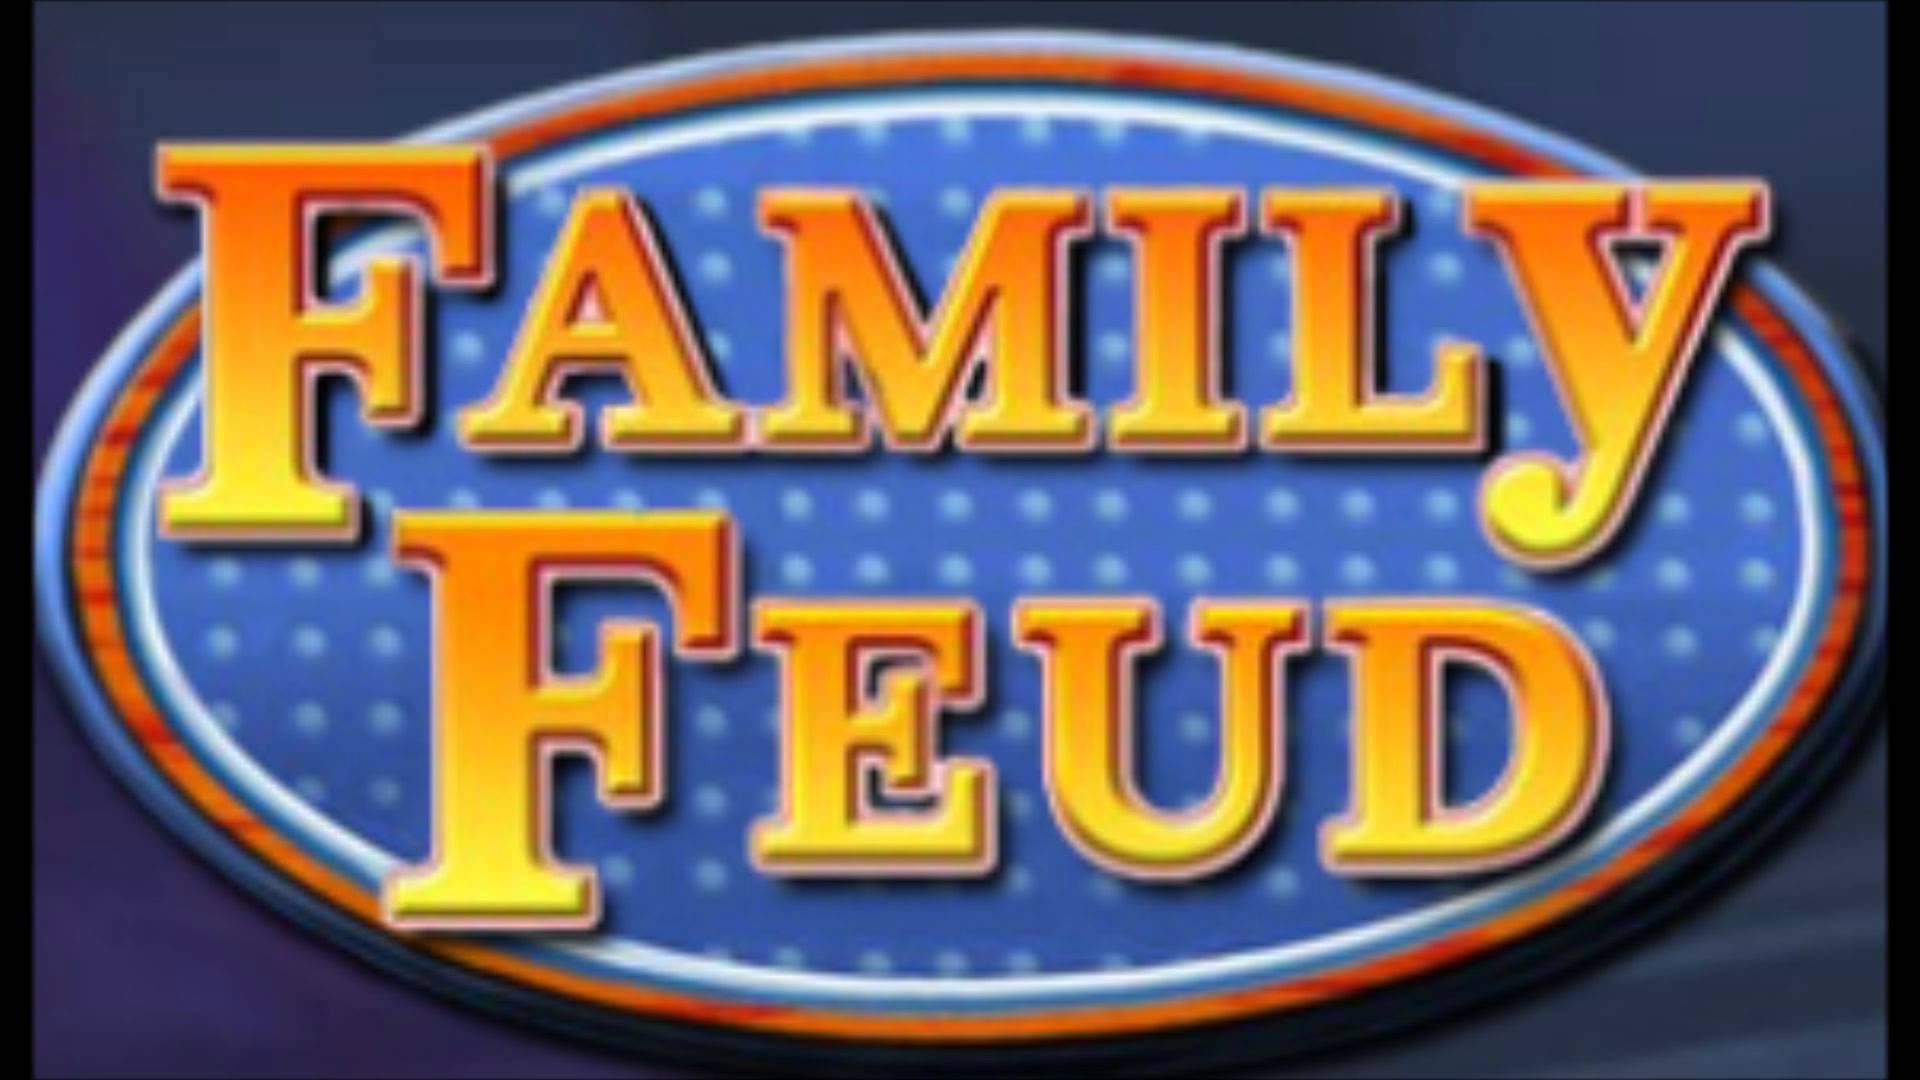 CRMla Game Show Family Feud Logo Background